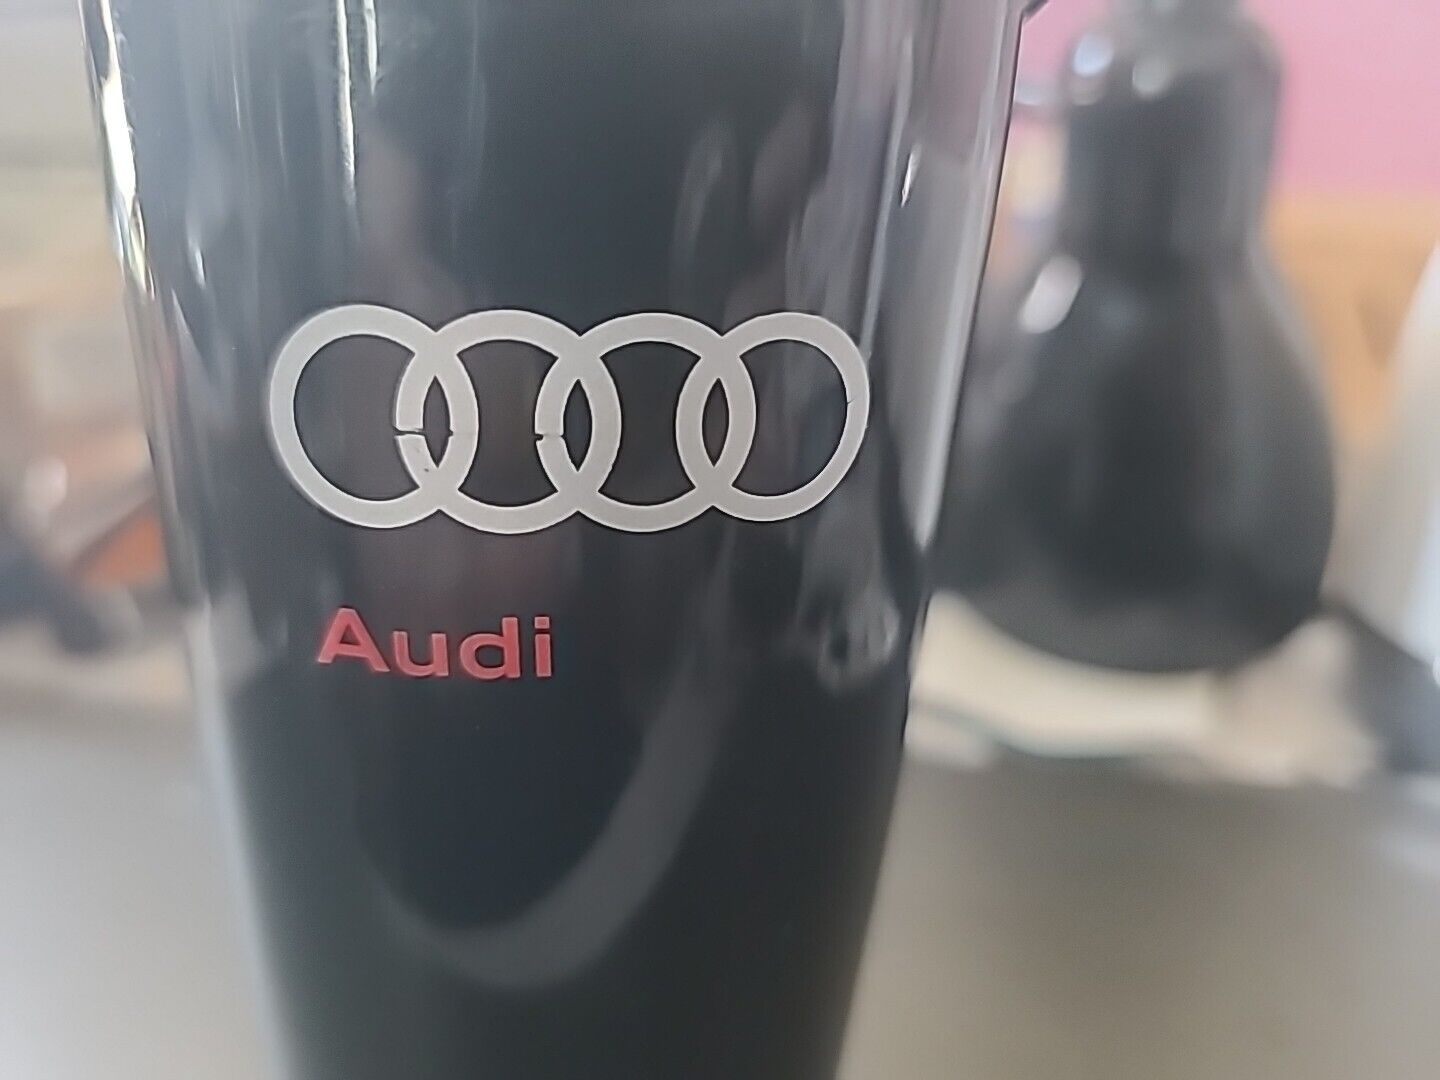 Audi Ceramic Tall Mug. No Lid